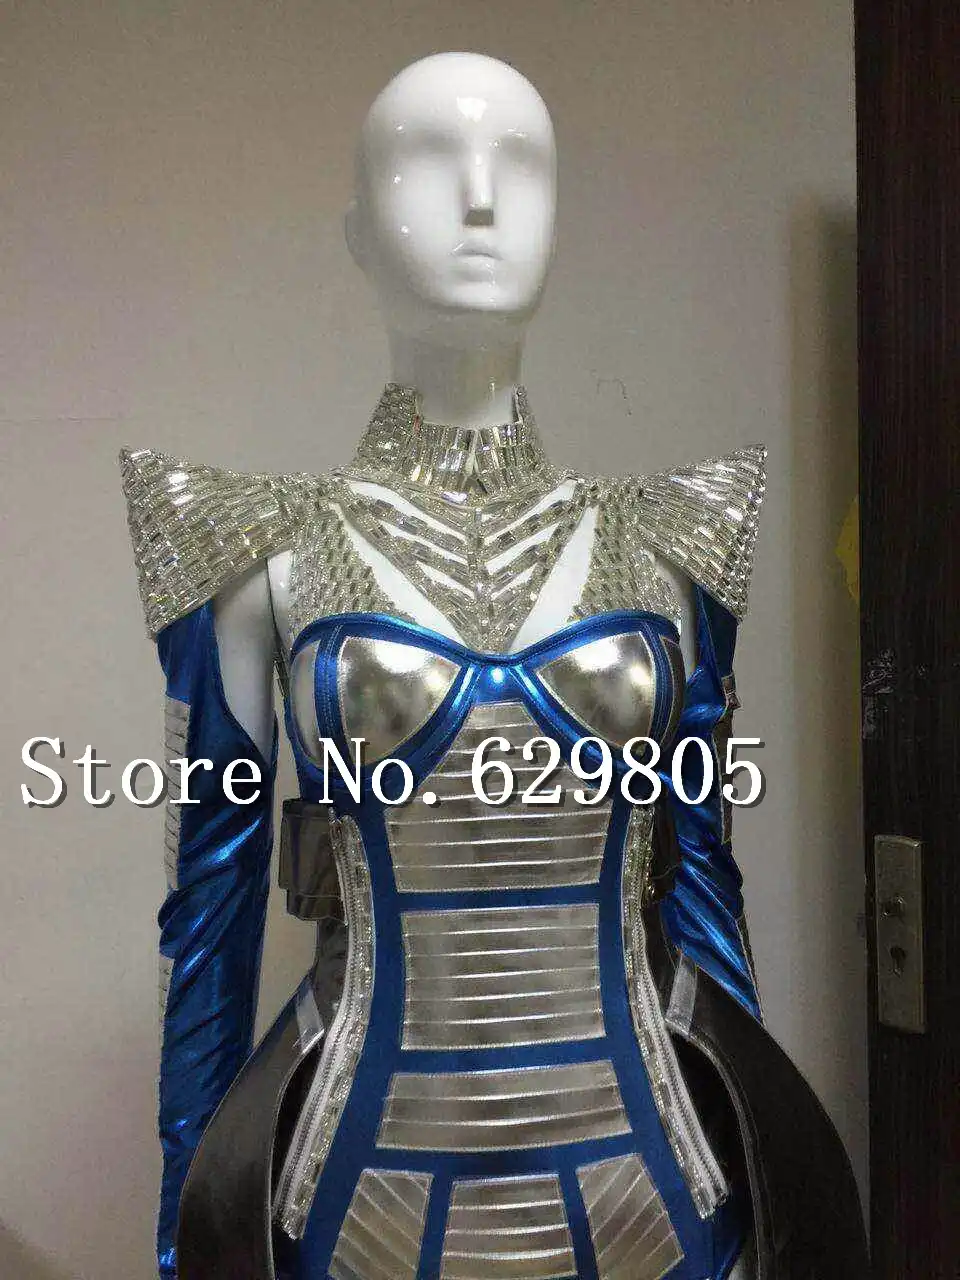 armored wedding dress